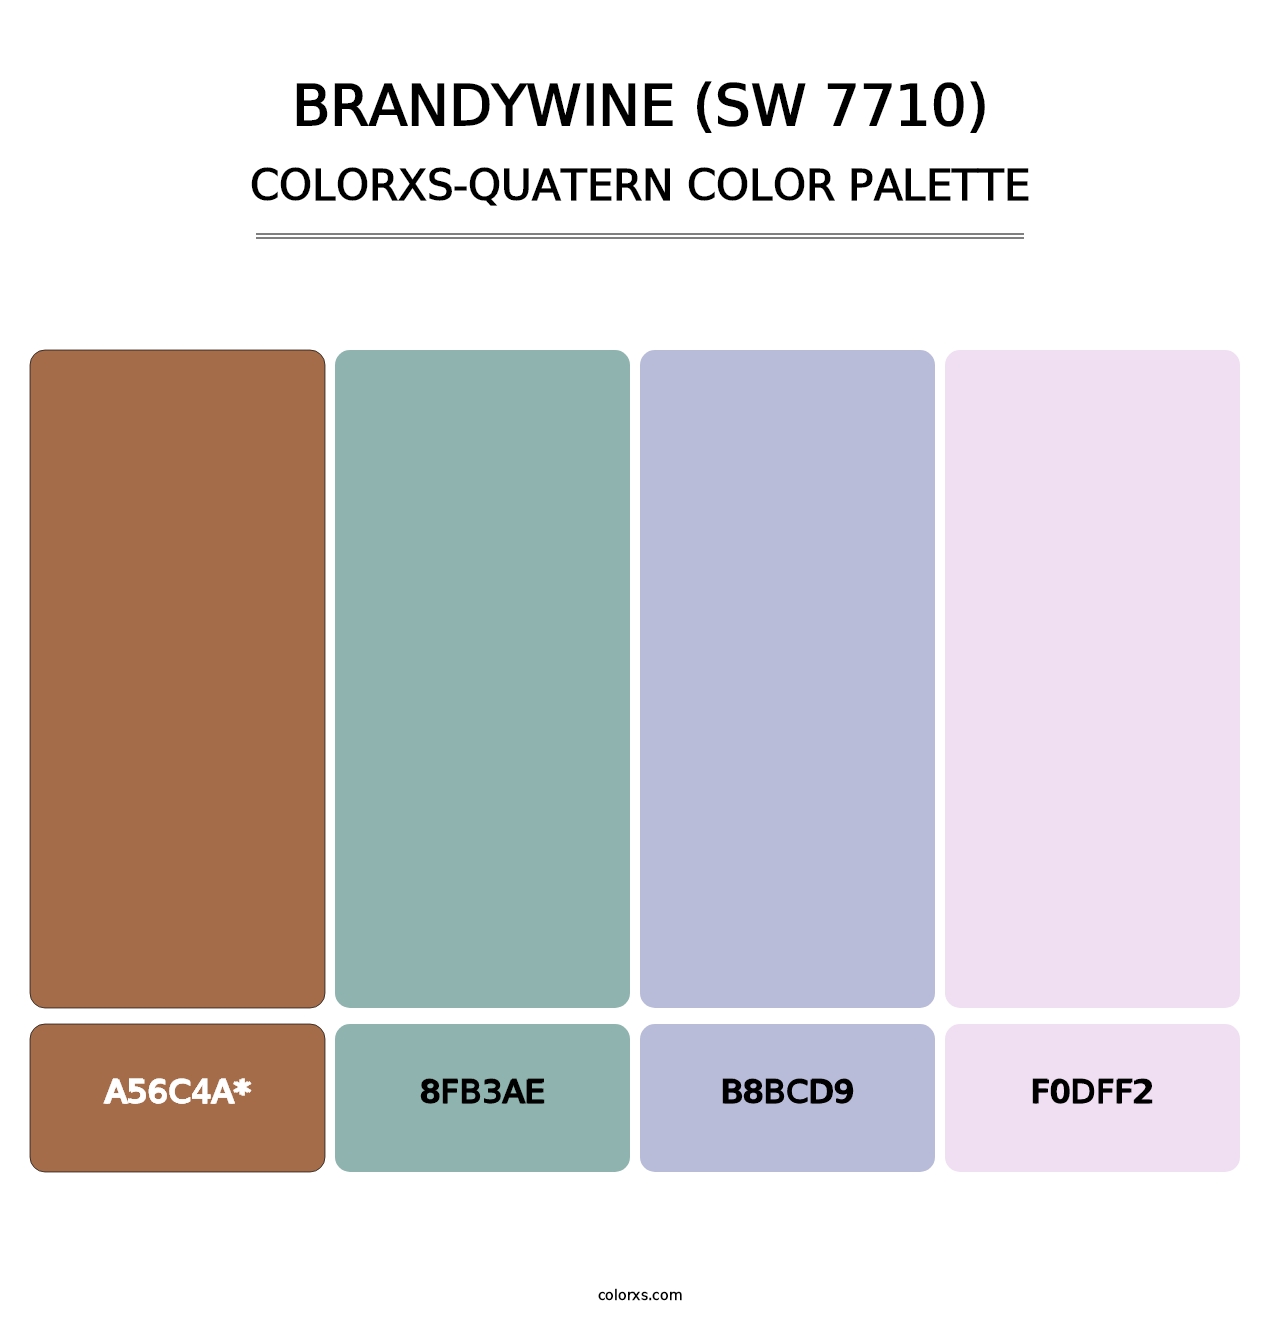 Brandywine (SW 7710) - Colorxs Quatern Palette